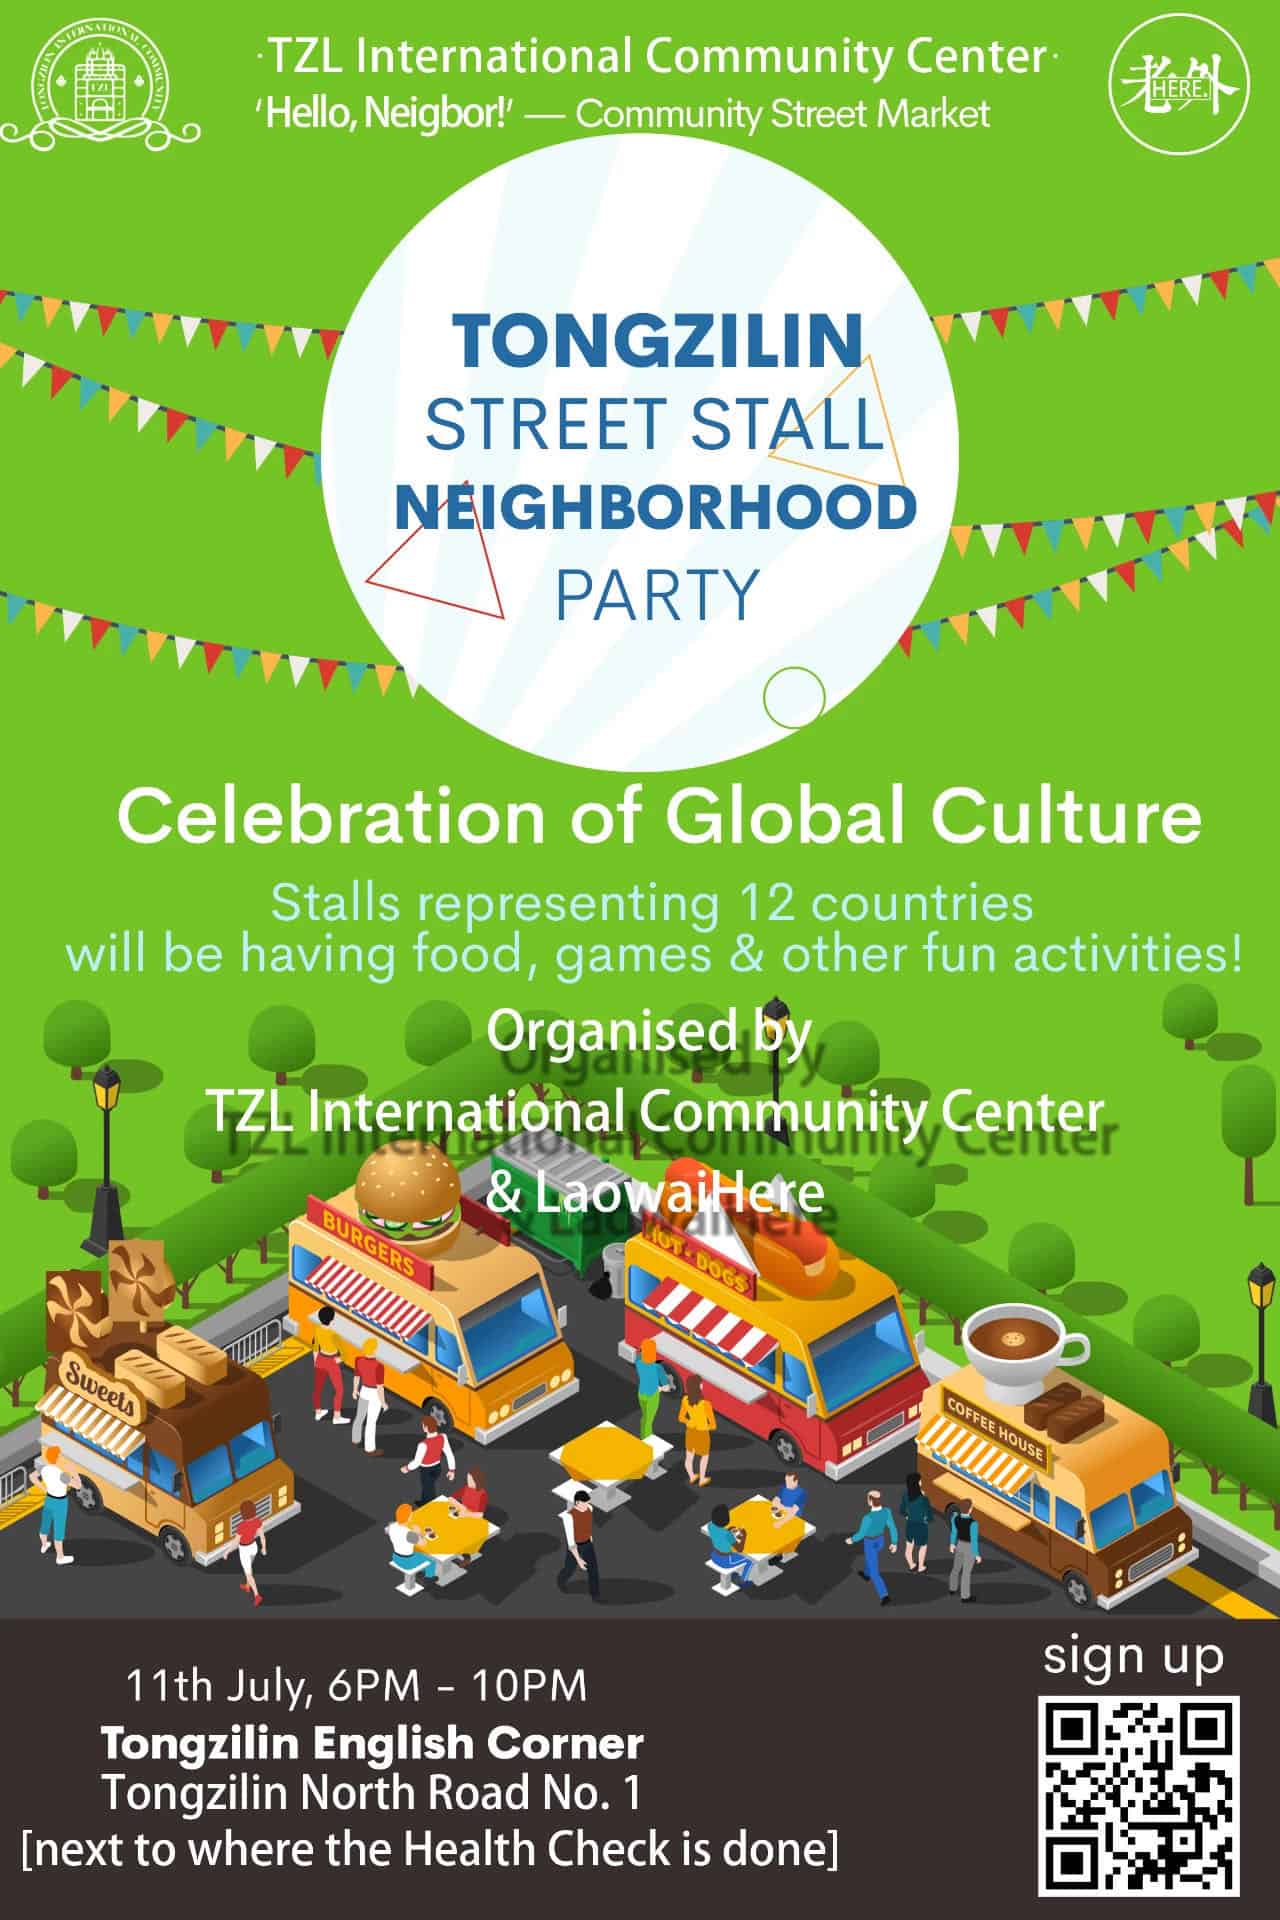 July 11 Tongzilin Street Stall Neighborhood Party chengdu expat 1